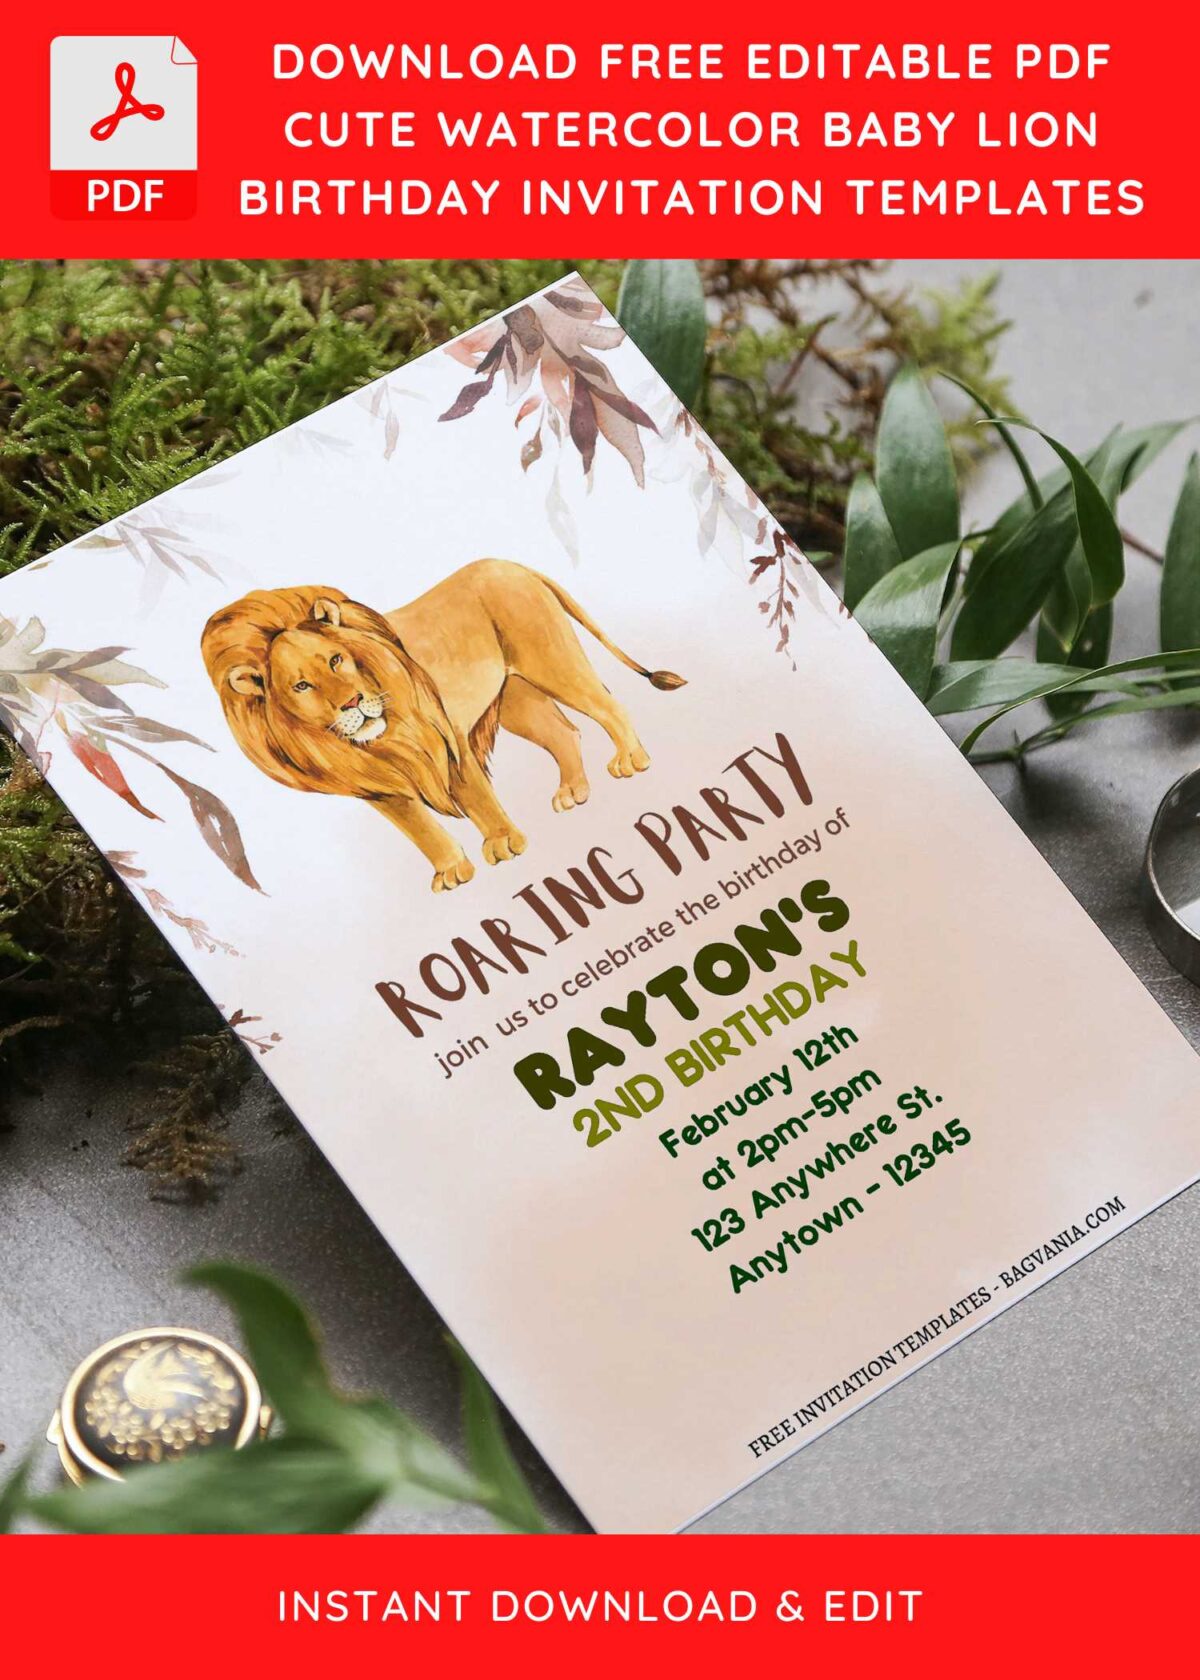 (Free Editable PDF) Adorable Jungle Roaring Birthday Party Invitation Templates F